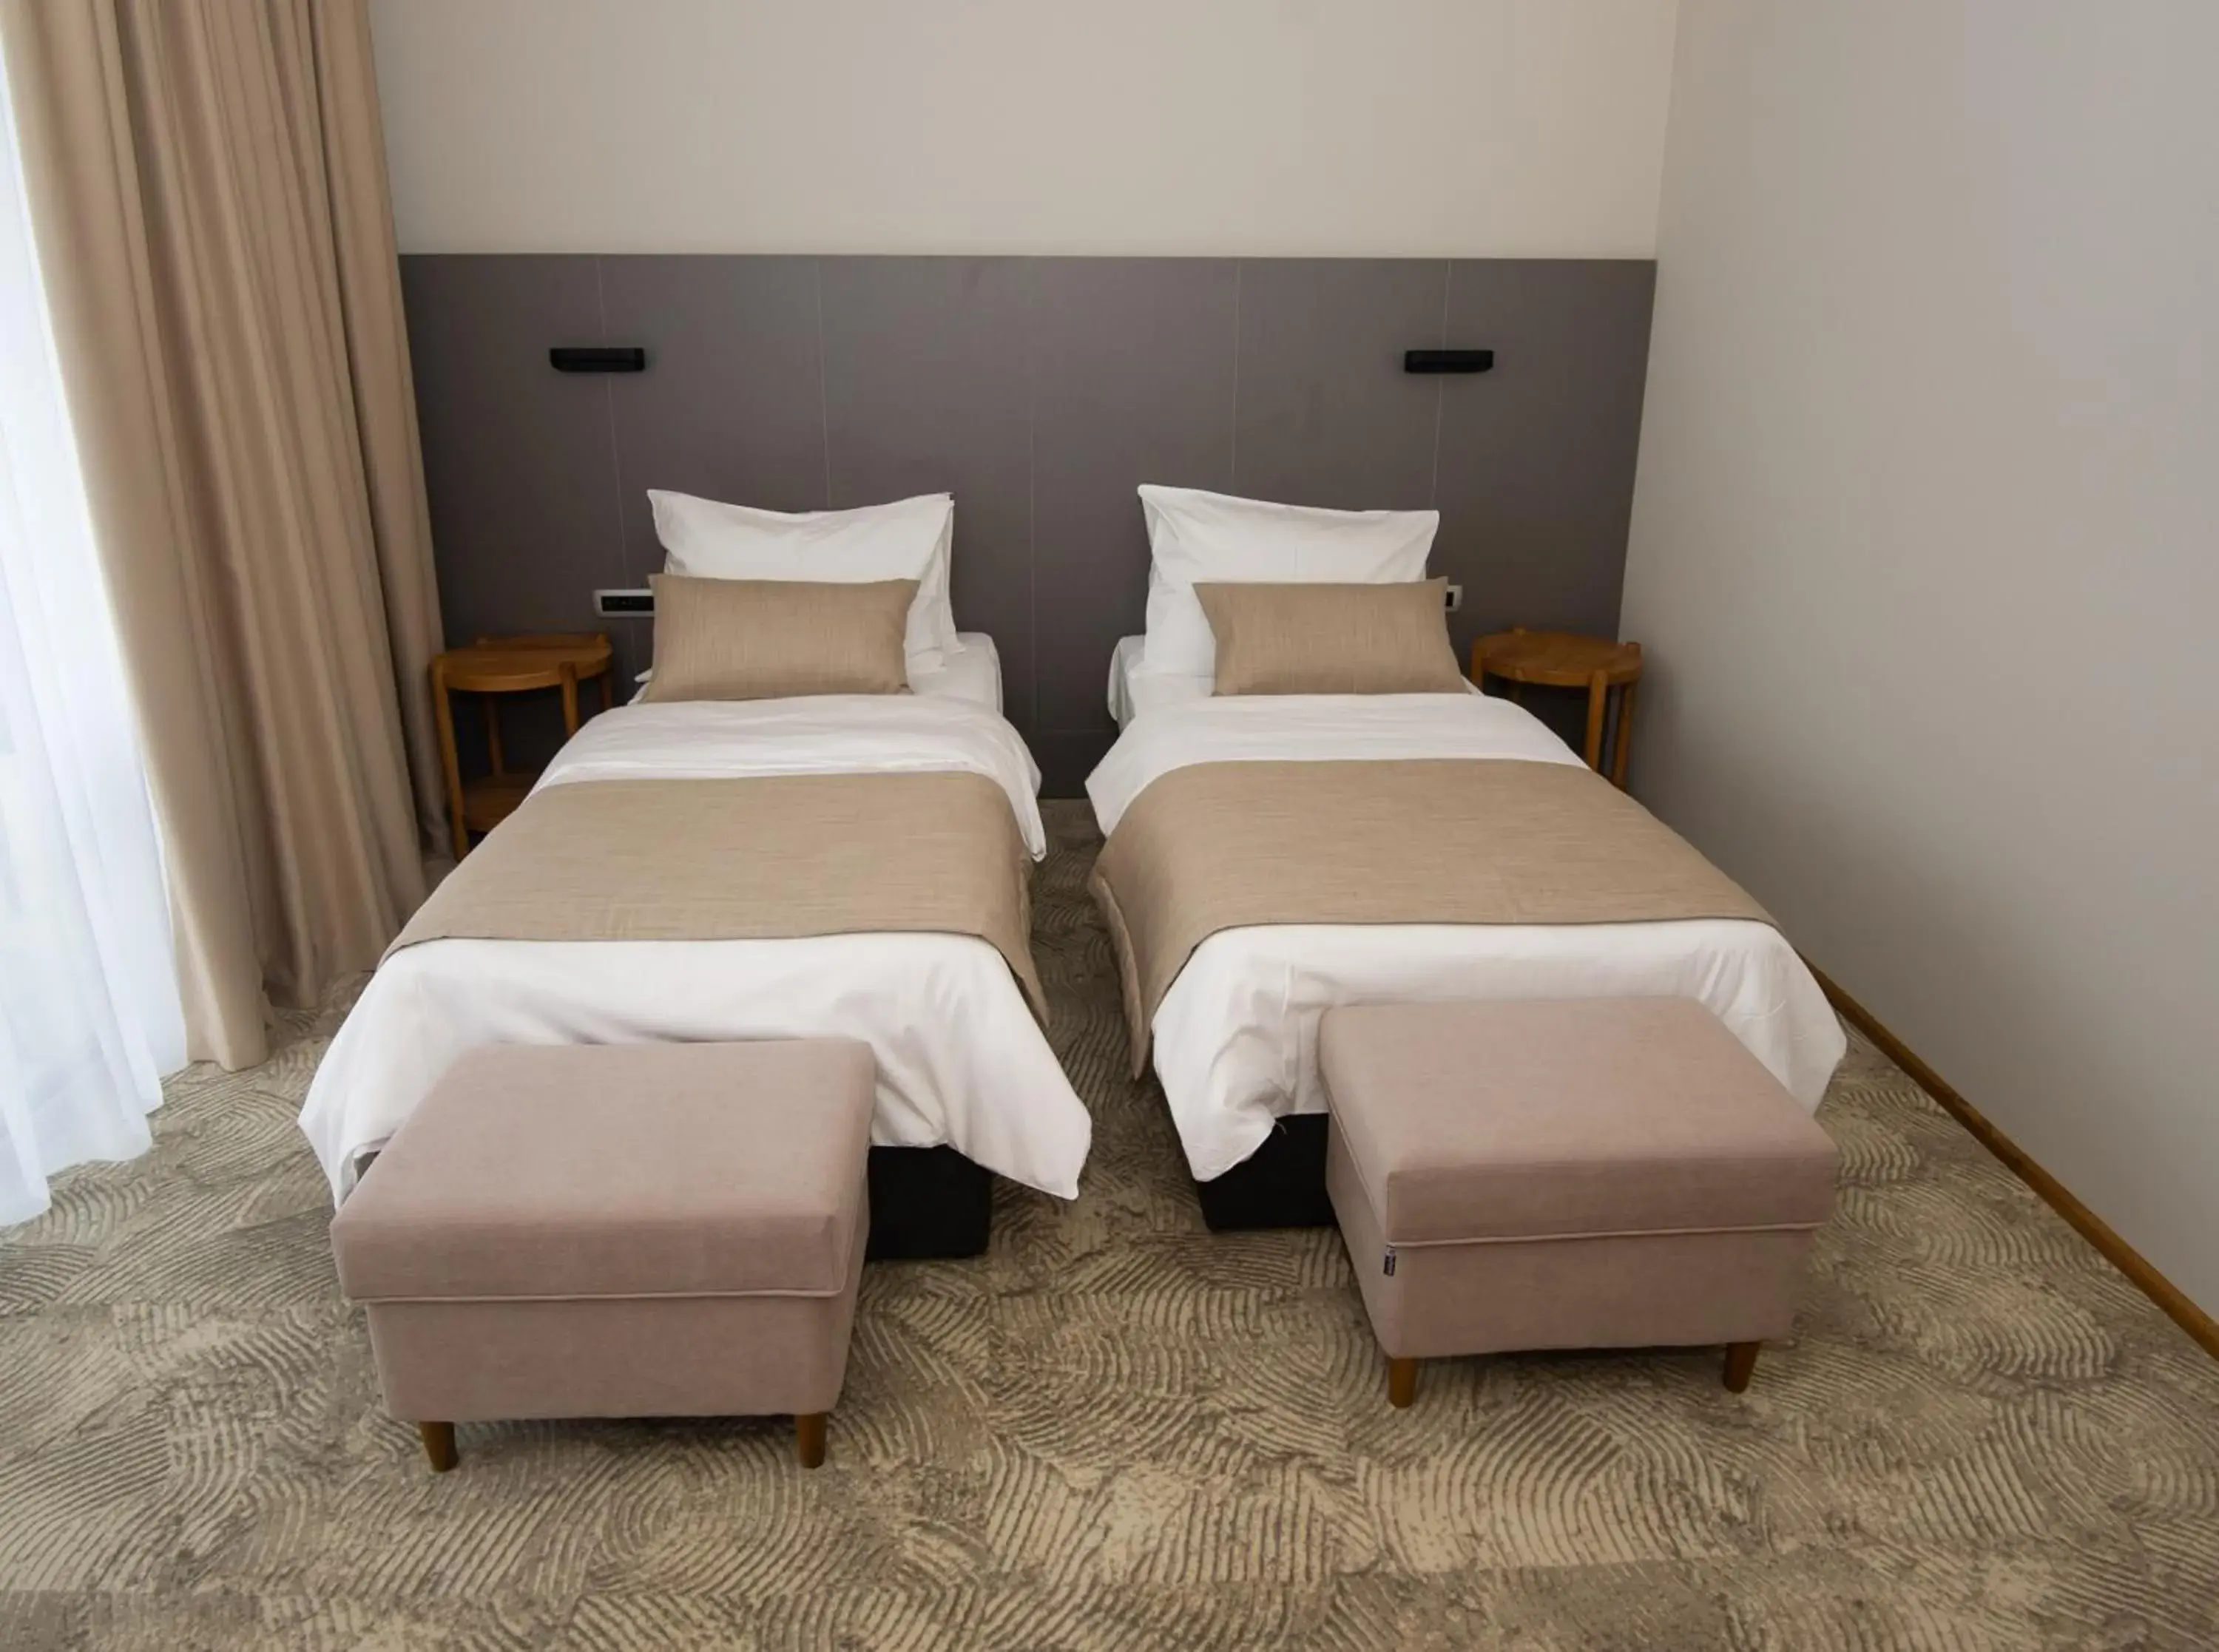 Bed in Hotel Grande Casa